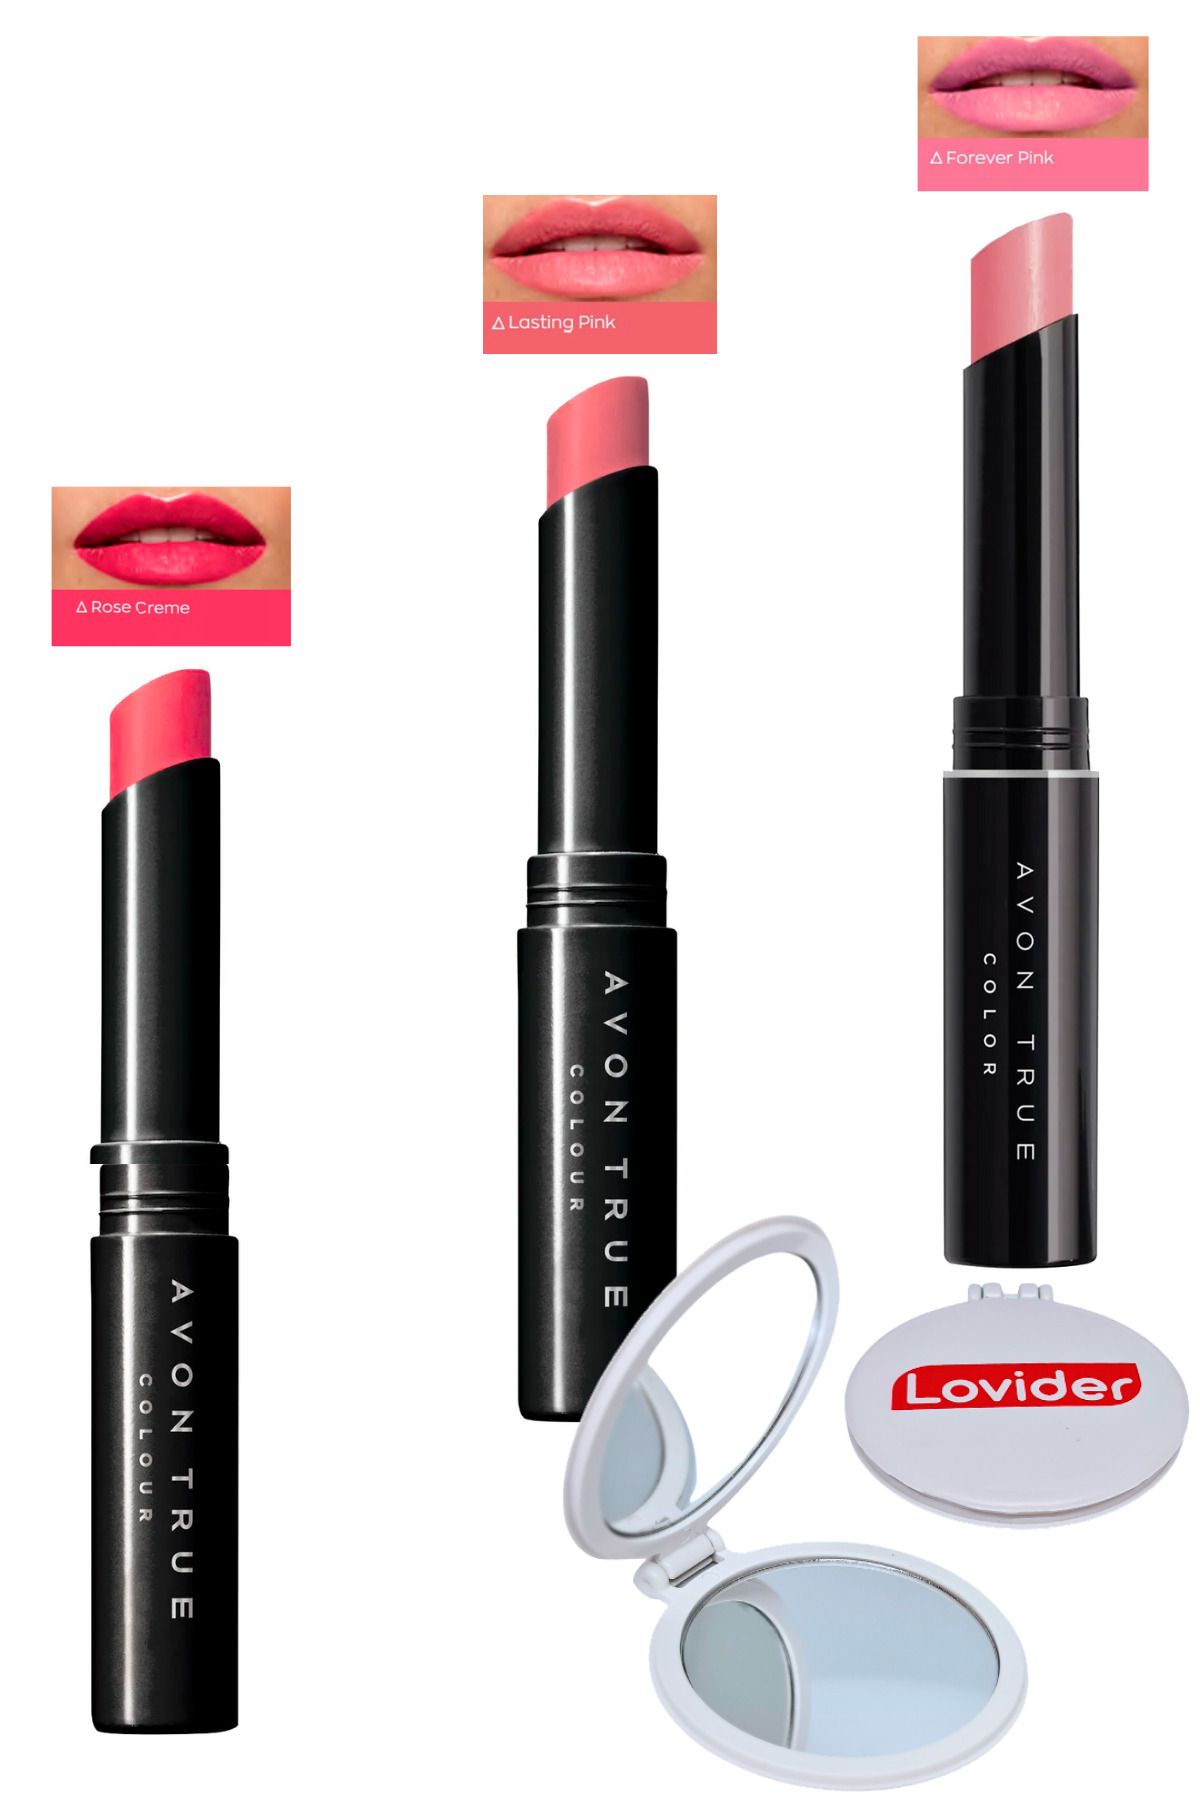 Avon Beauty 3'lü Ruj Paketi - Rose Creme + Lasting Pink + Forever Pink + Lovider Cep Aynası